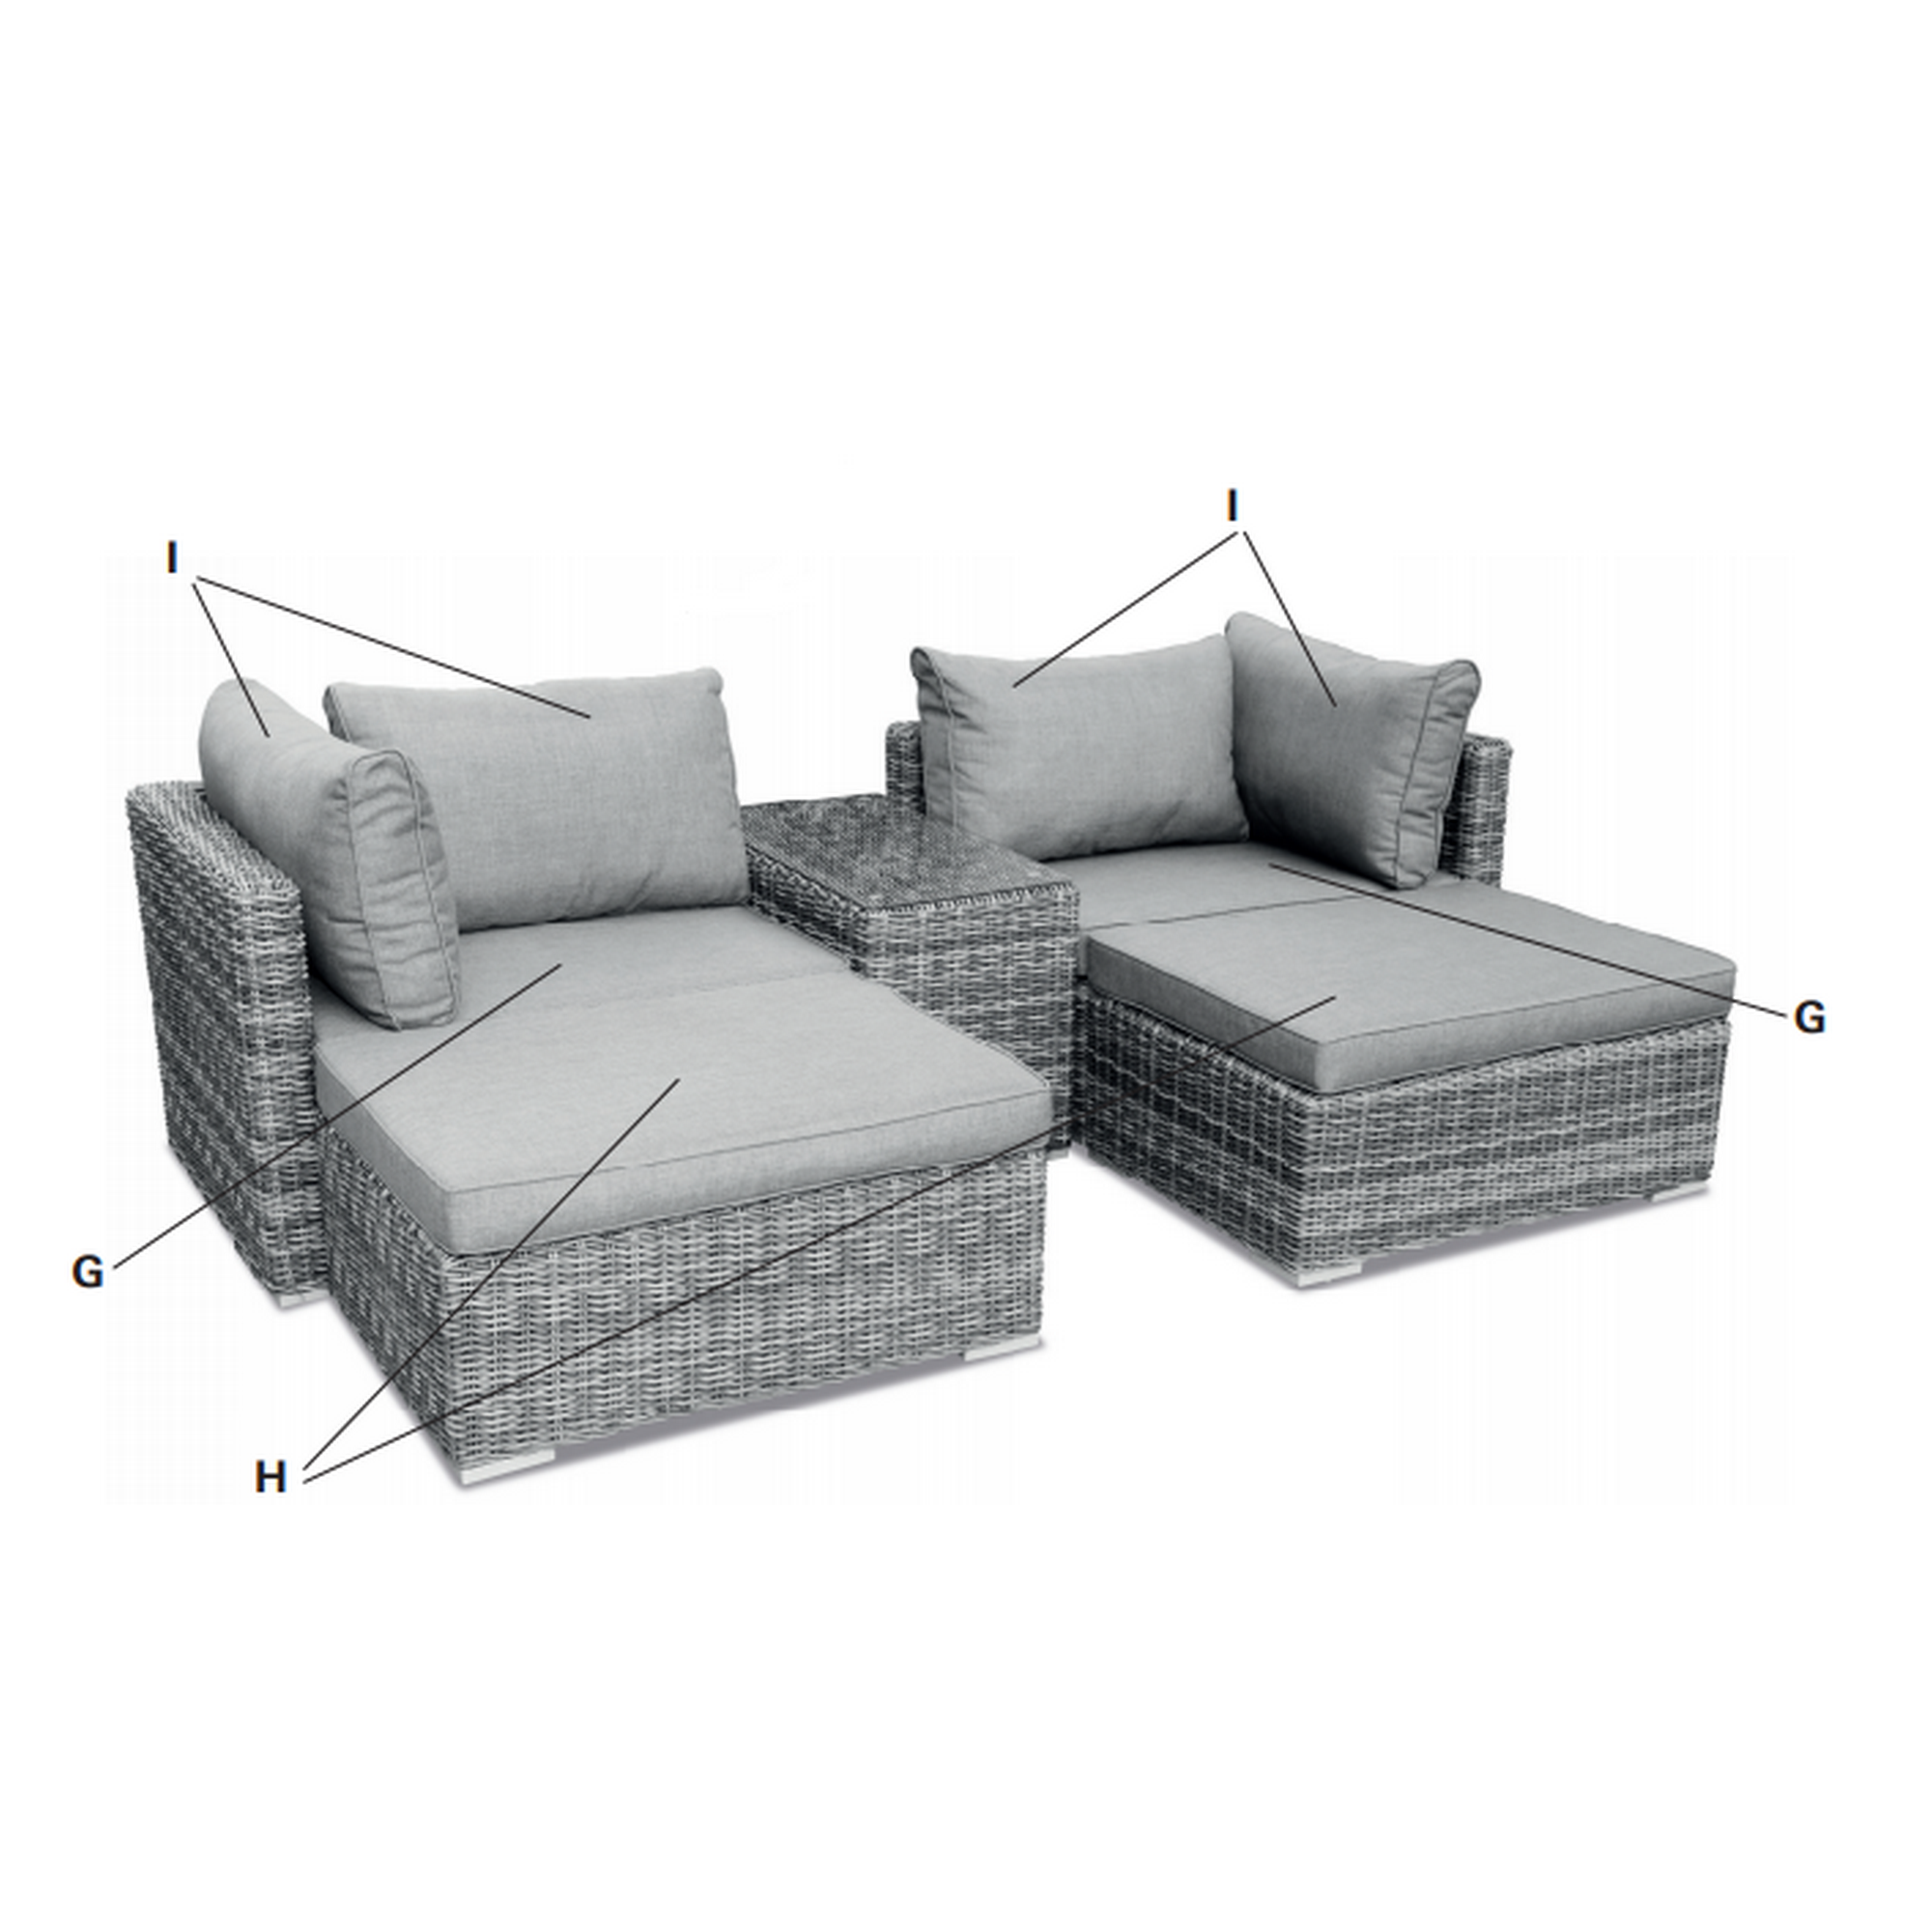 Sessel-Sitzkissen Nr. G für Multifunktionslounge 'Samoa' grau + product picture